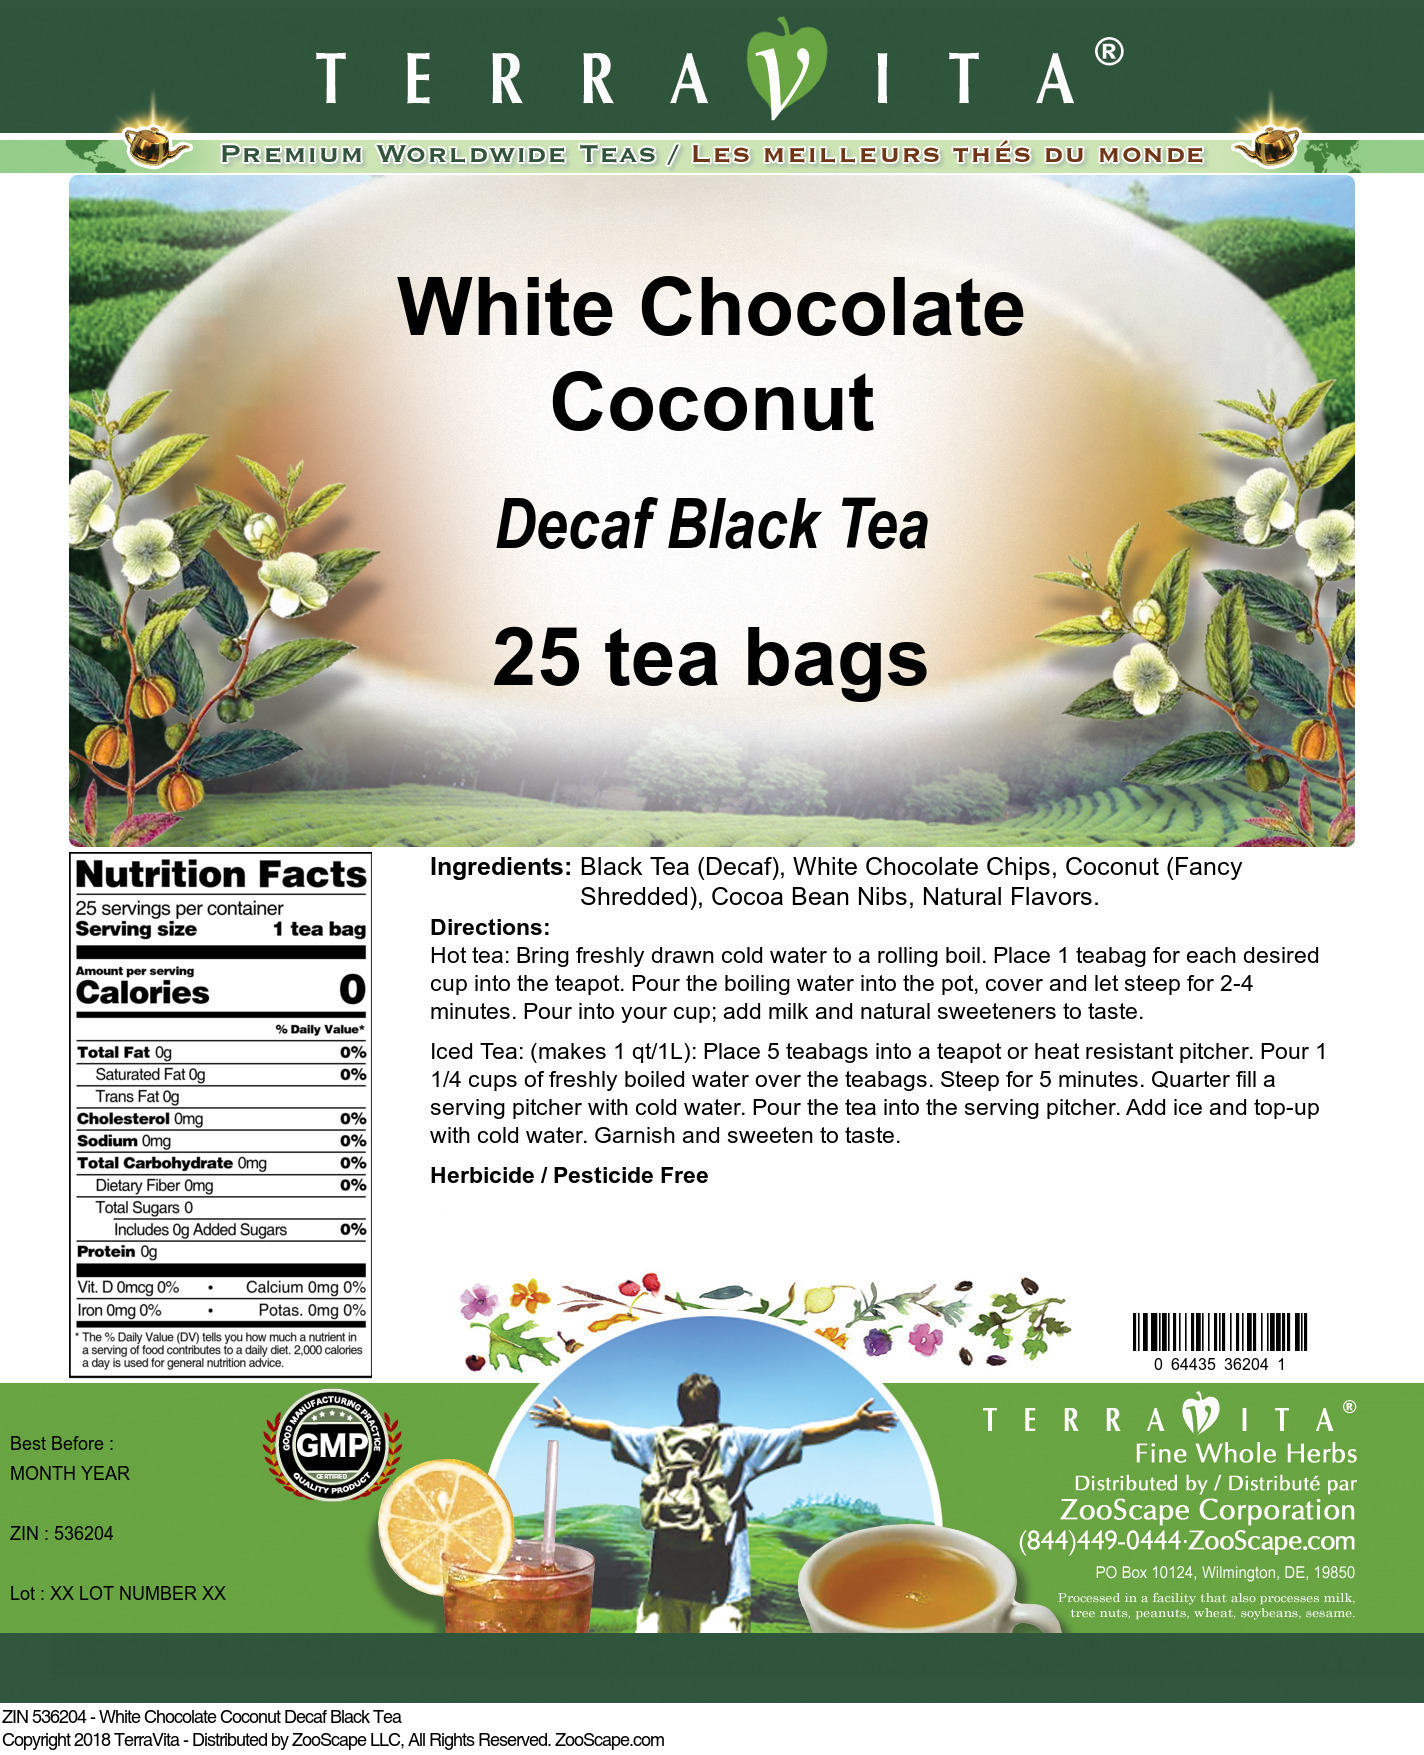 White Chocolate Coconut Decaf Black Tea - Label